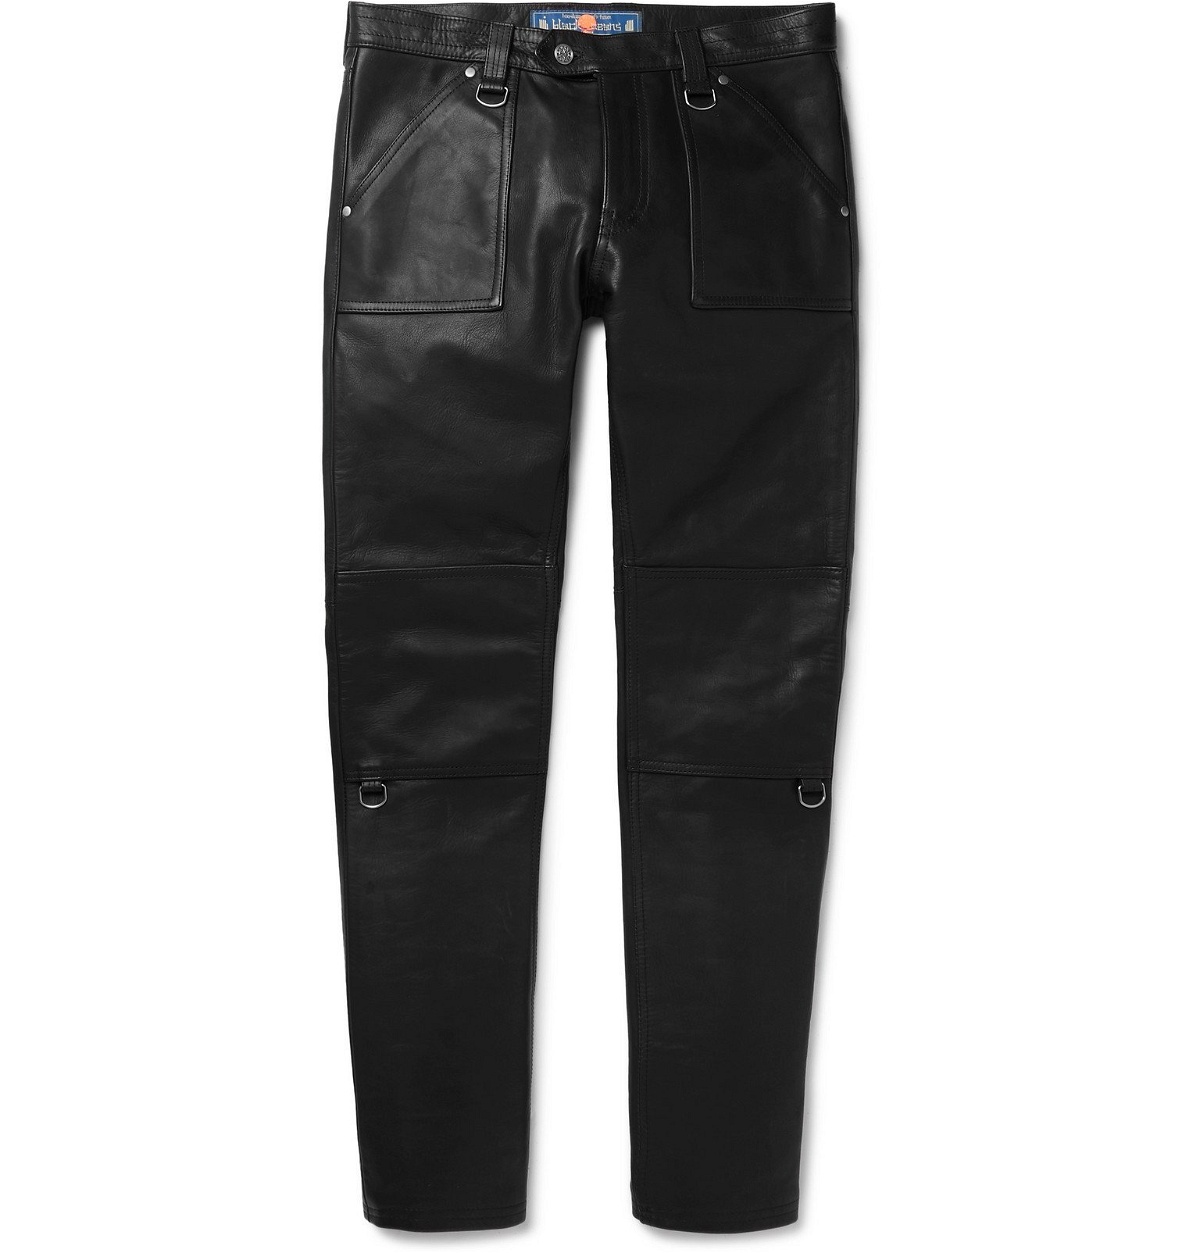 Blackmeans - Slim-Fit Panelled Leather Trousers - Black Blackmeans